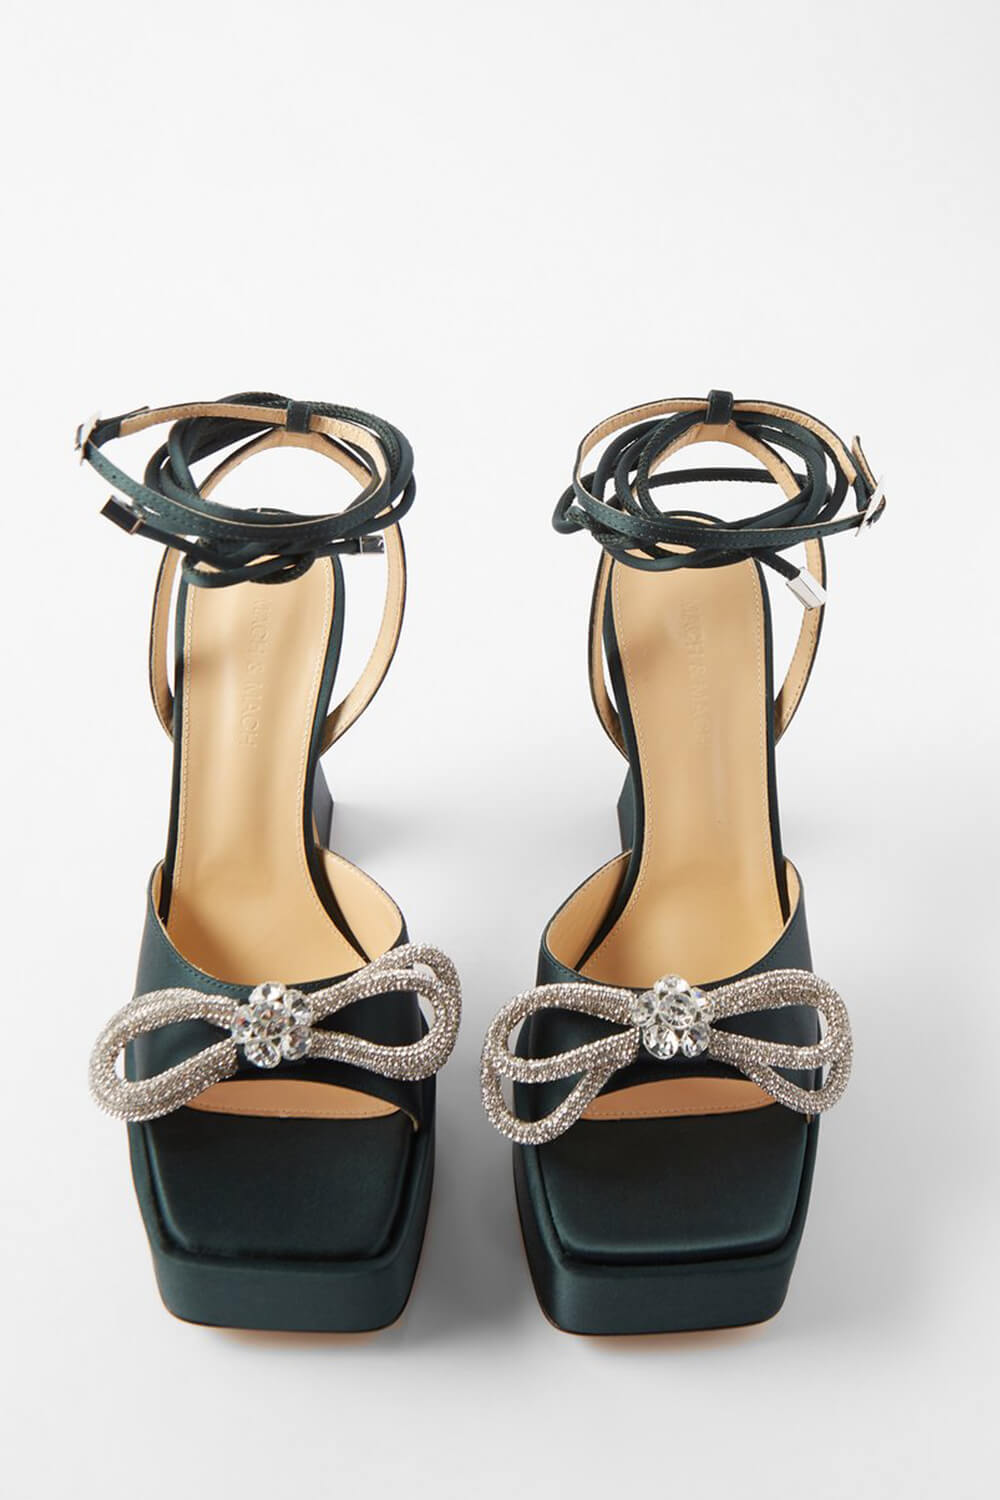 Iridescent Faux Leather Diamante Double Bow Embellished Open Square Toe Platform Ankle Sandals - Black